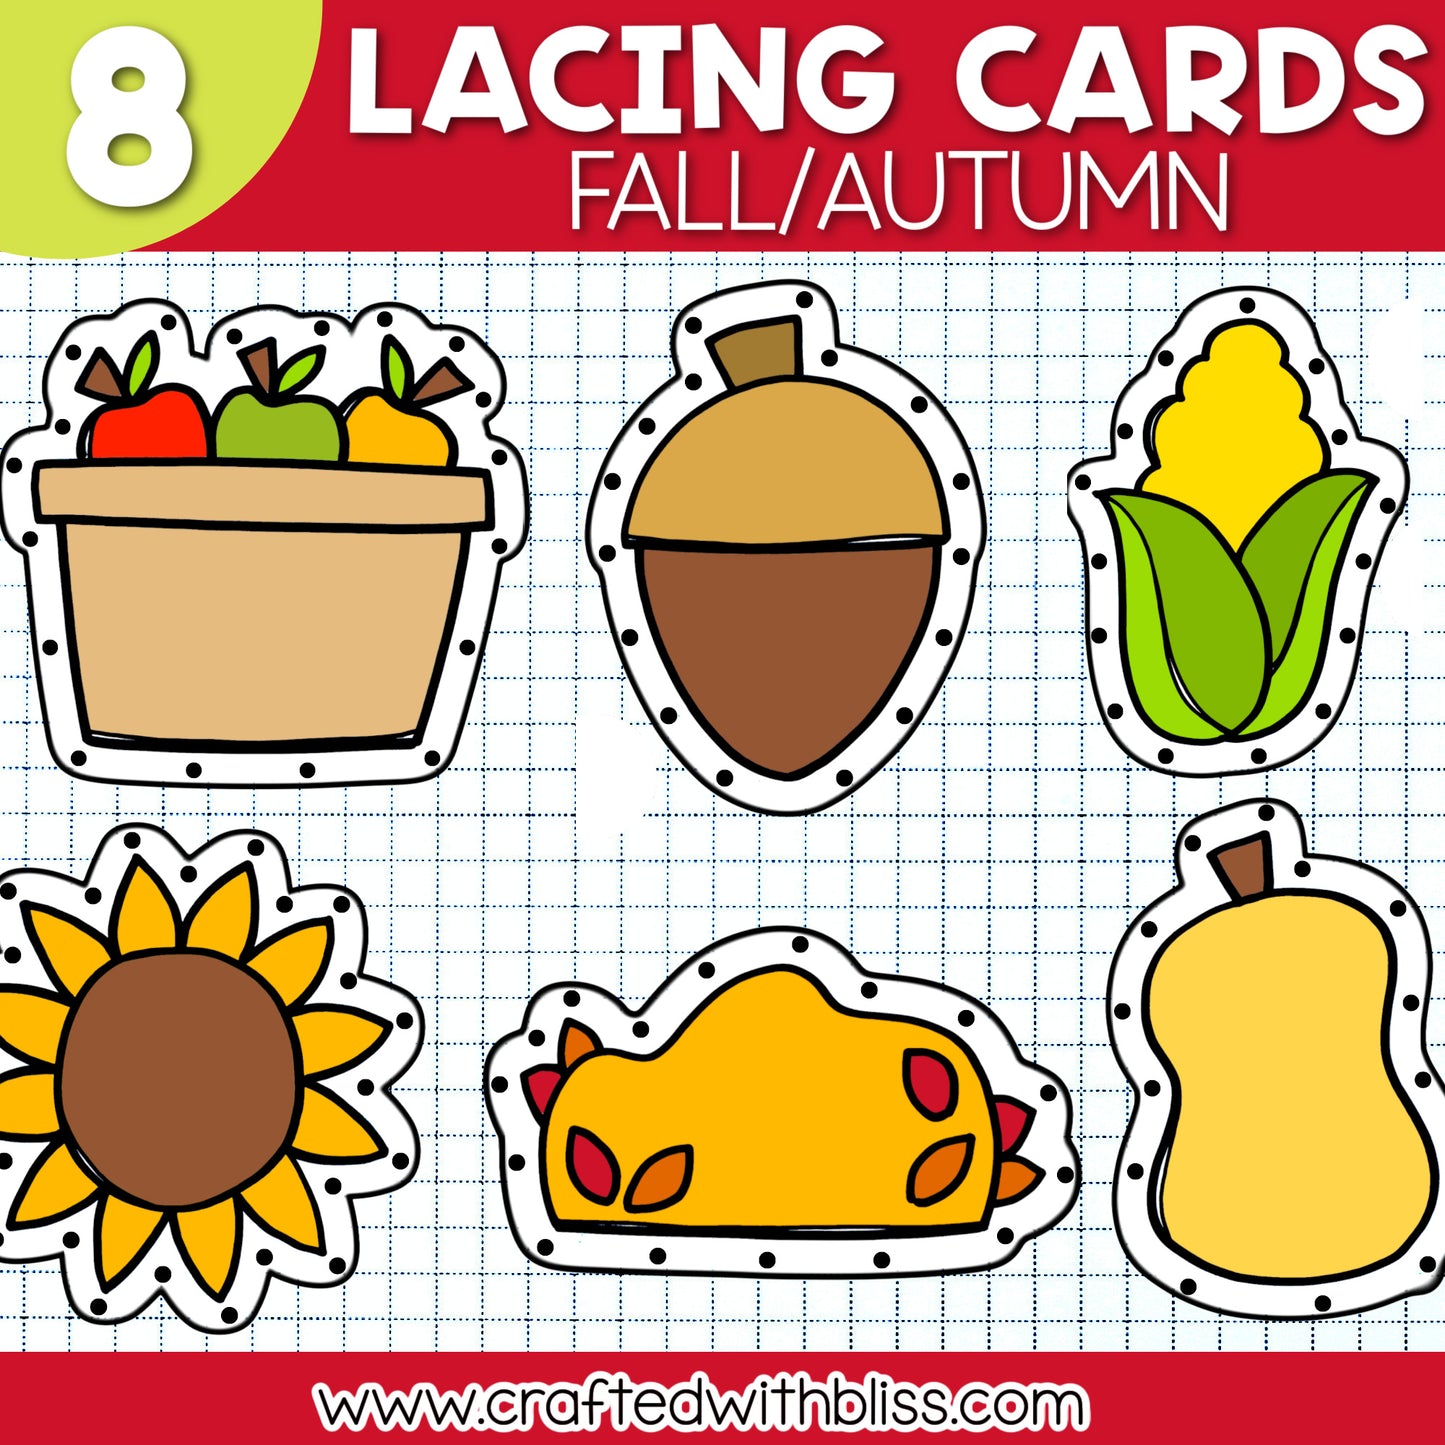 All Year Lacing Cards For Kids Big Bundle (Preschool, Sped, Kindergarten, OT)